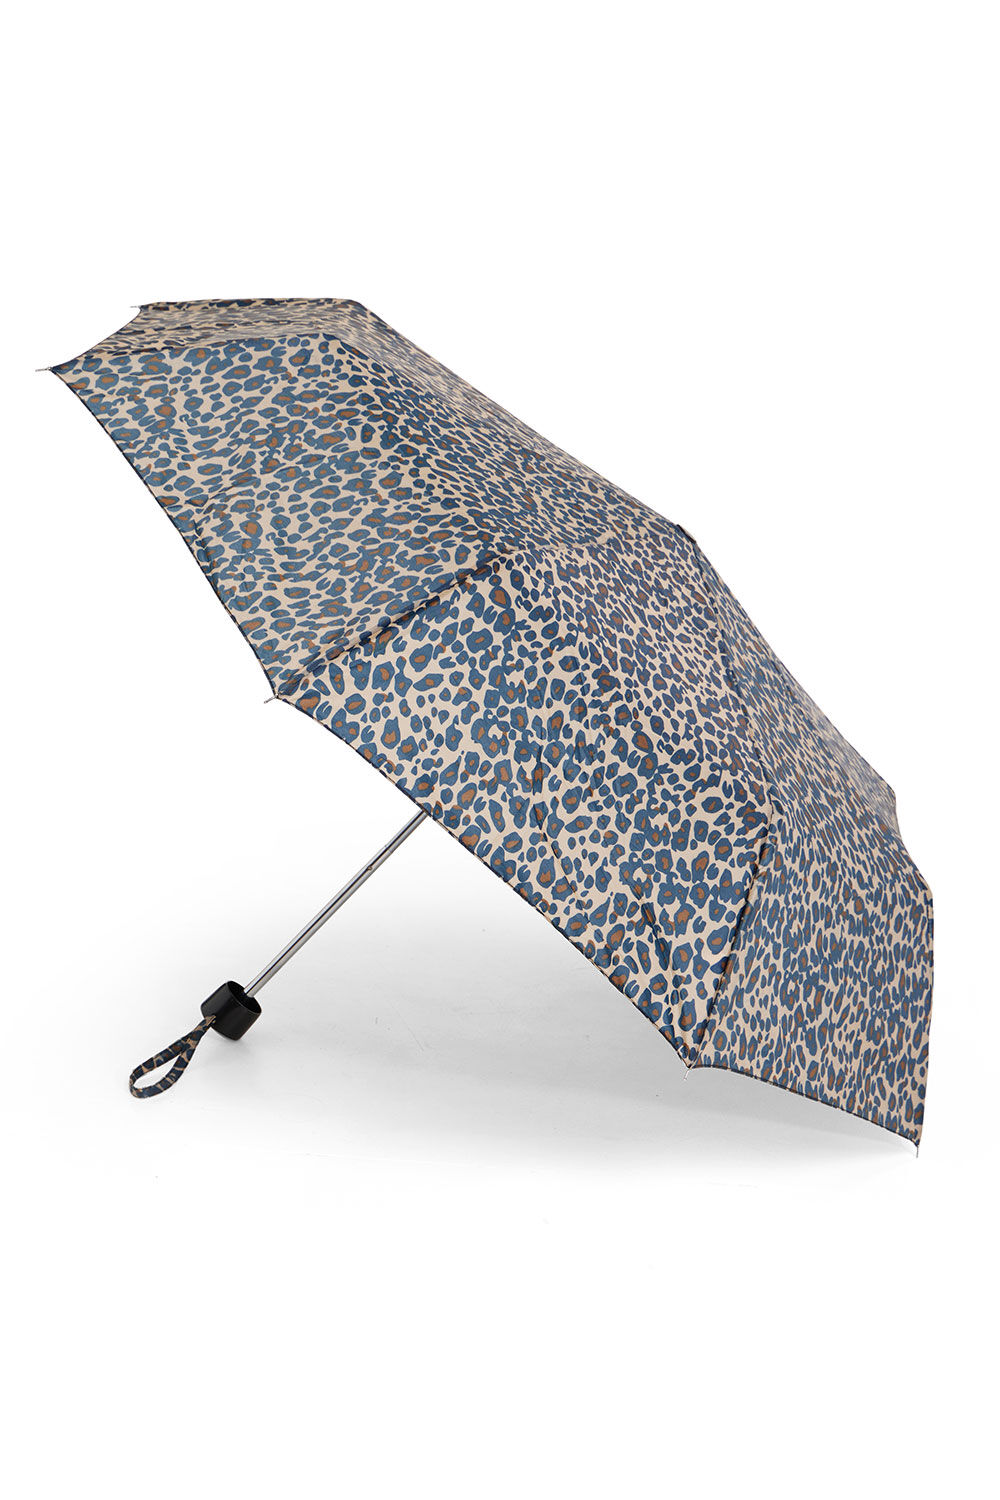 Bonmarche Women’s Yellow Leopard Print Umbrella